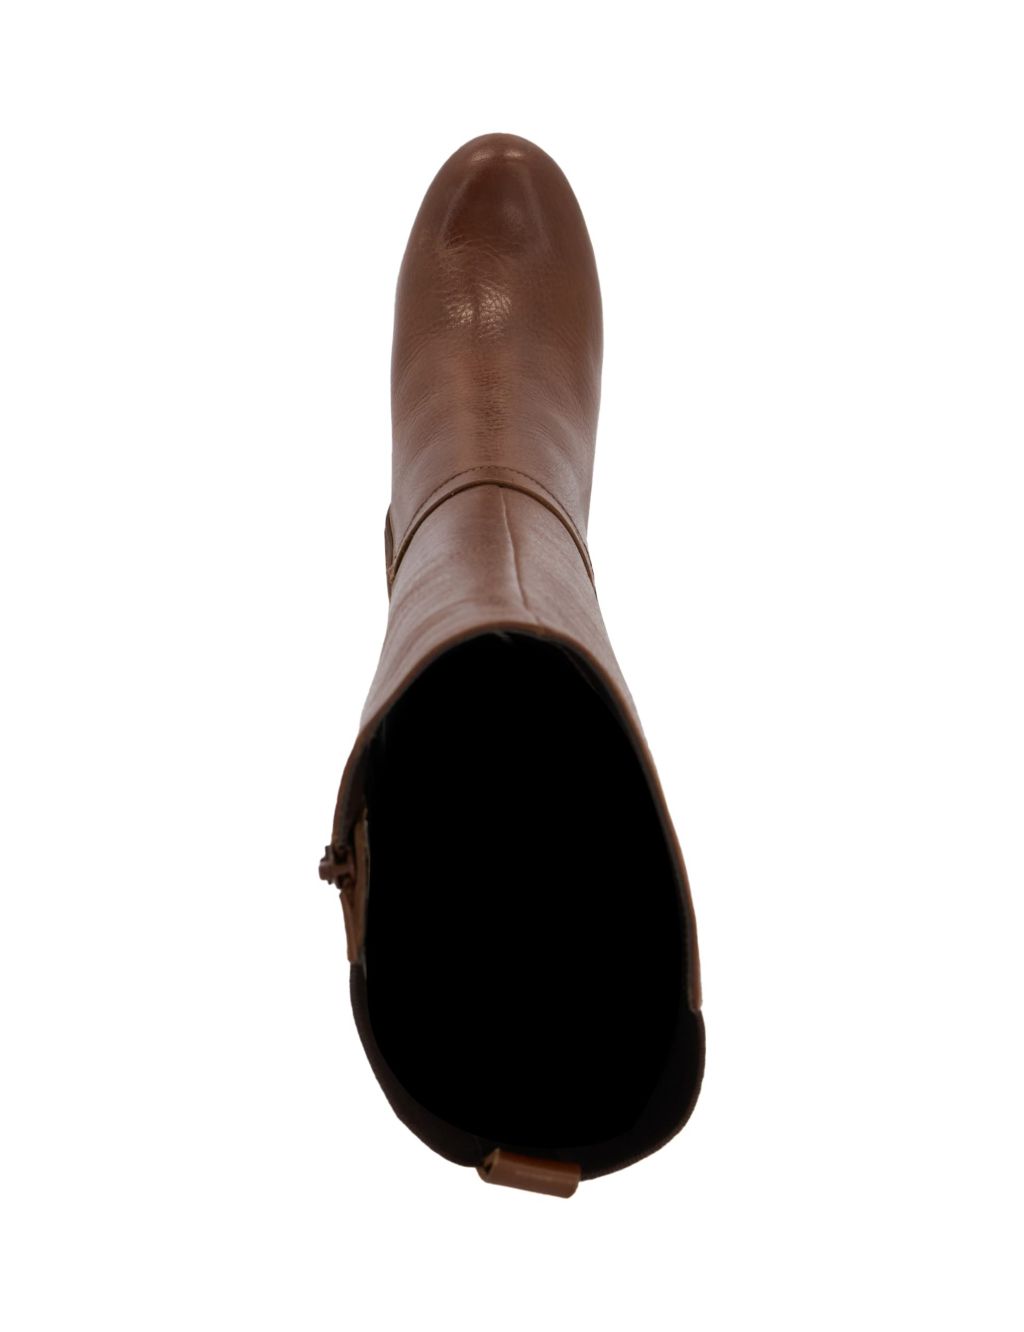 Leather Buckle Block Heel Knee High Boots image 3